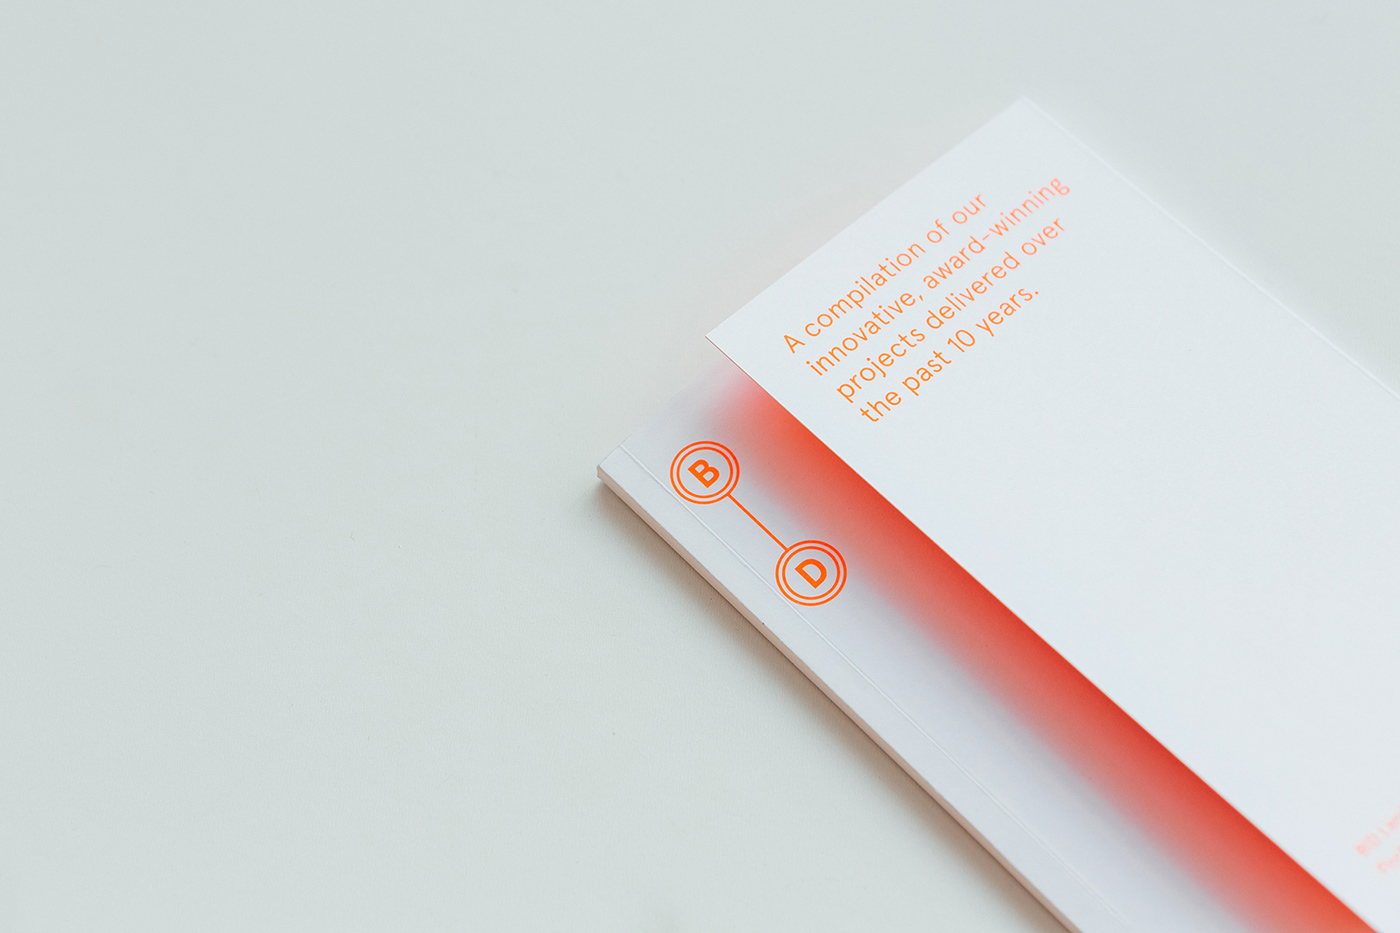 architecture book design business card foiling Landscape neon orange postcard Stationery